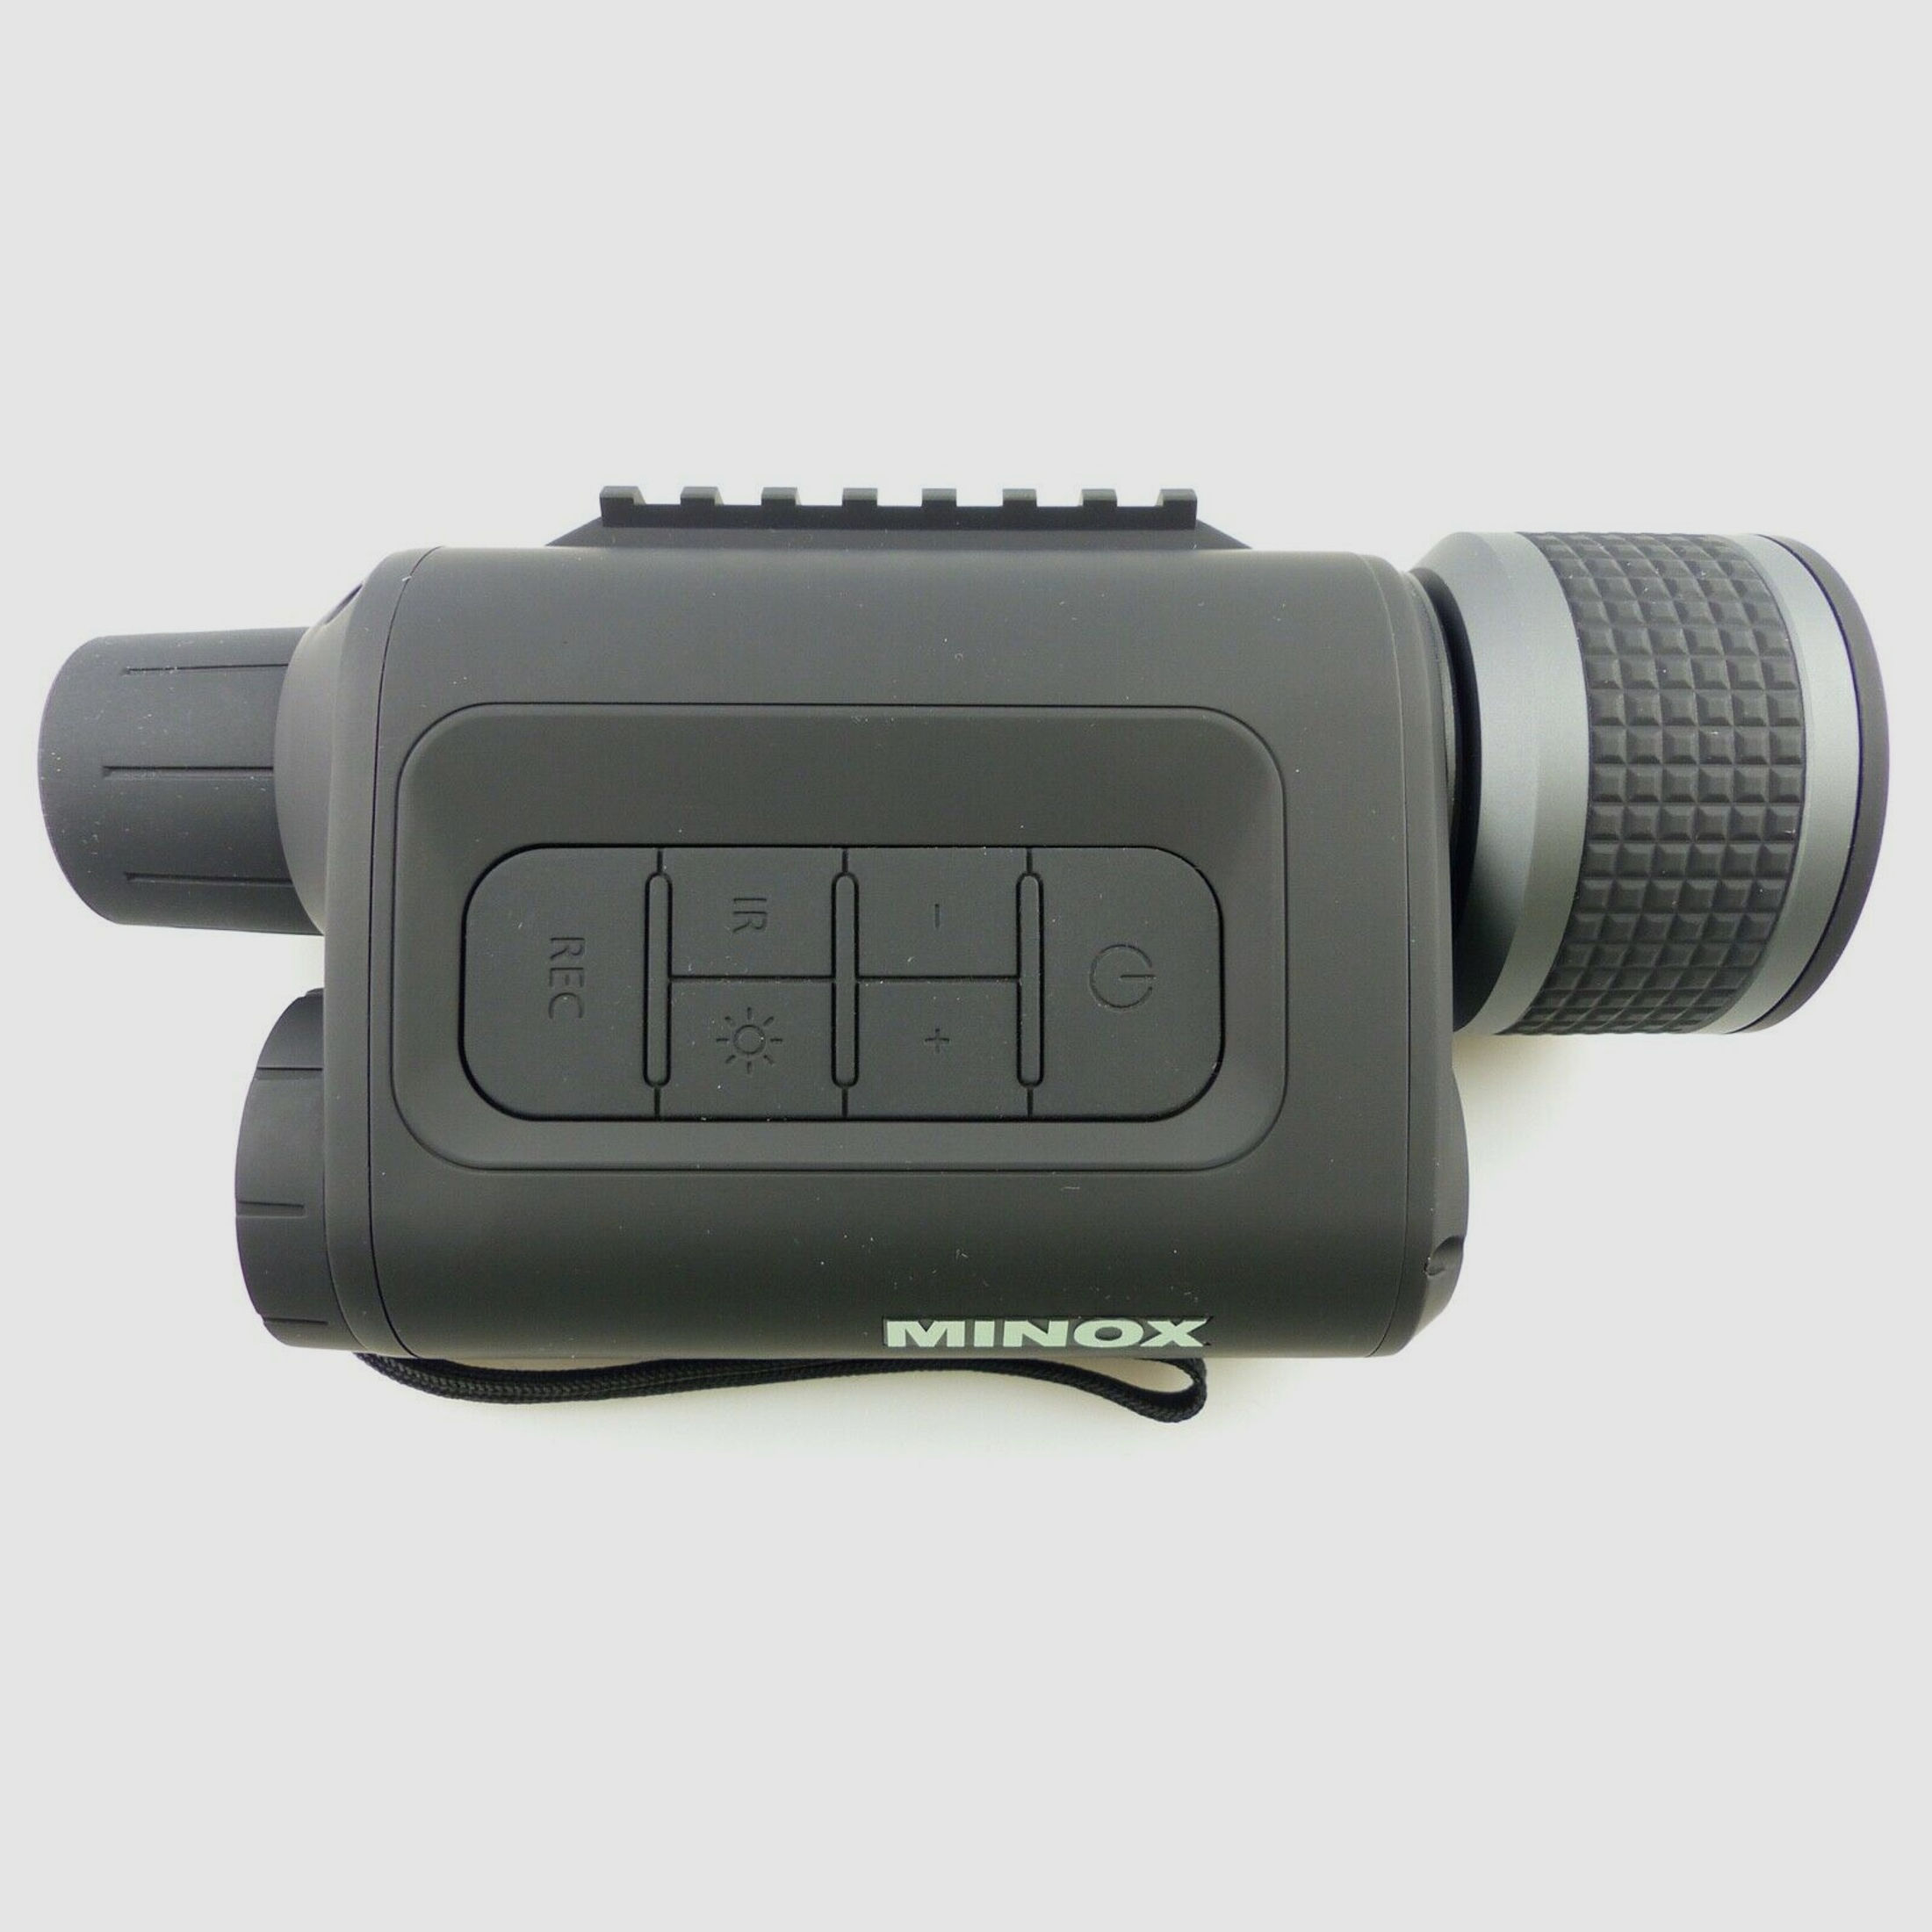 Minox 62426 Digitales Nachtsichtgerät NVD 650 mit Aufnahmefunktion